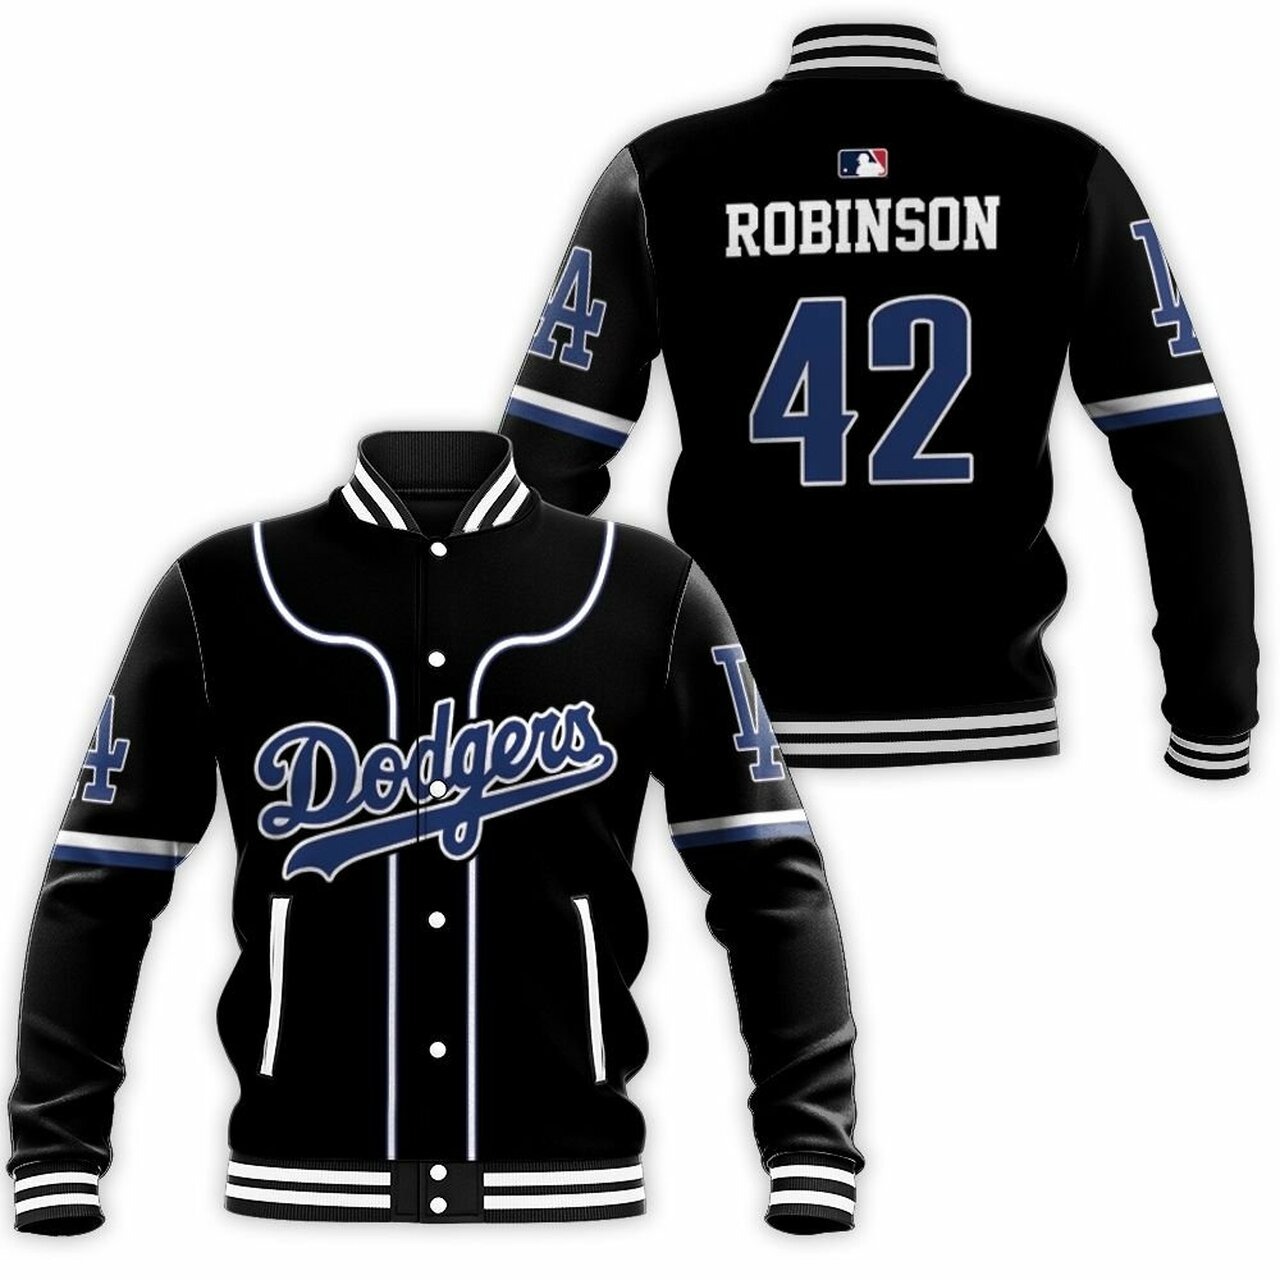 Los Angeles Dodgers Jackie Robinson 42 Mlb 2020 Black Baseball Jacket